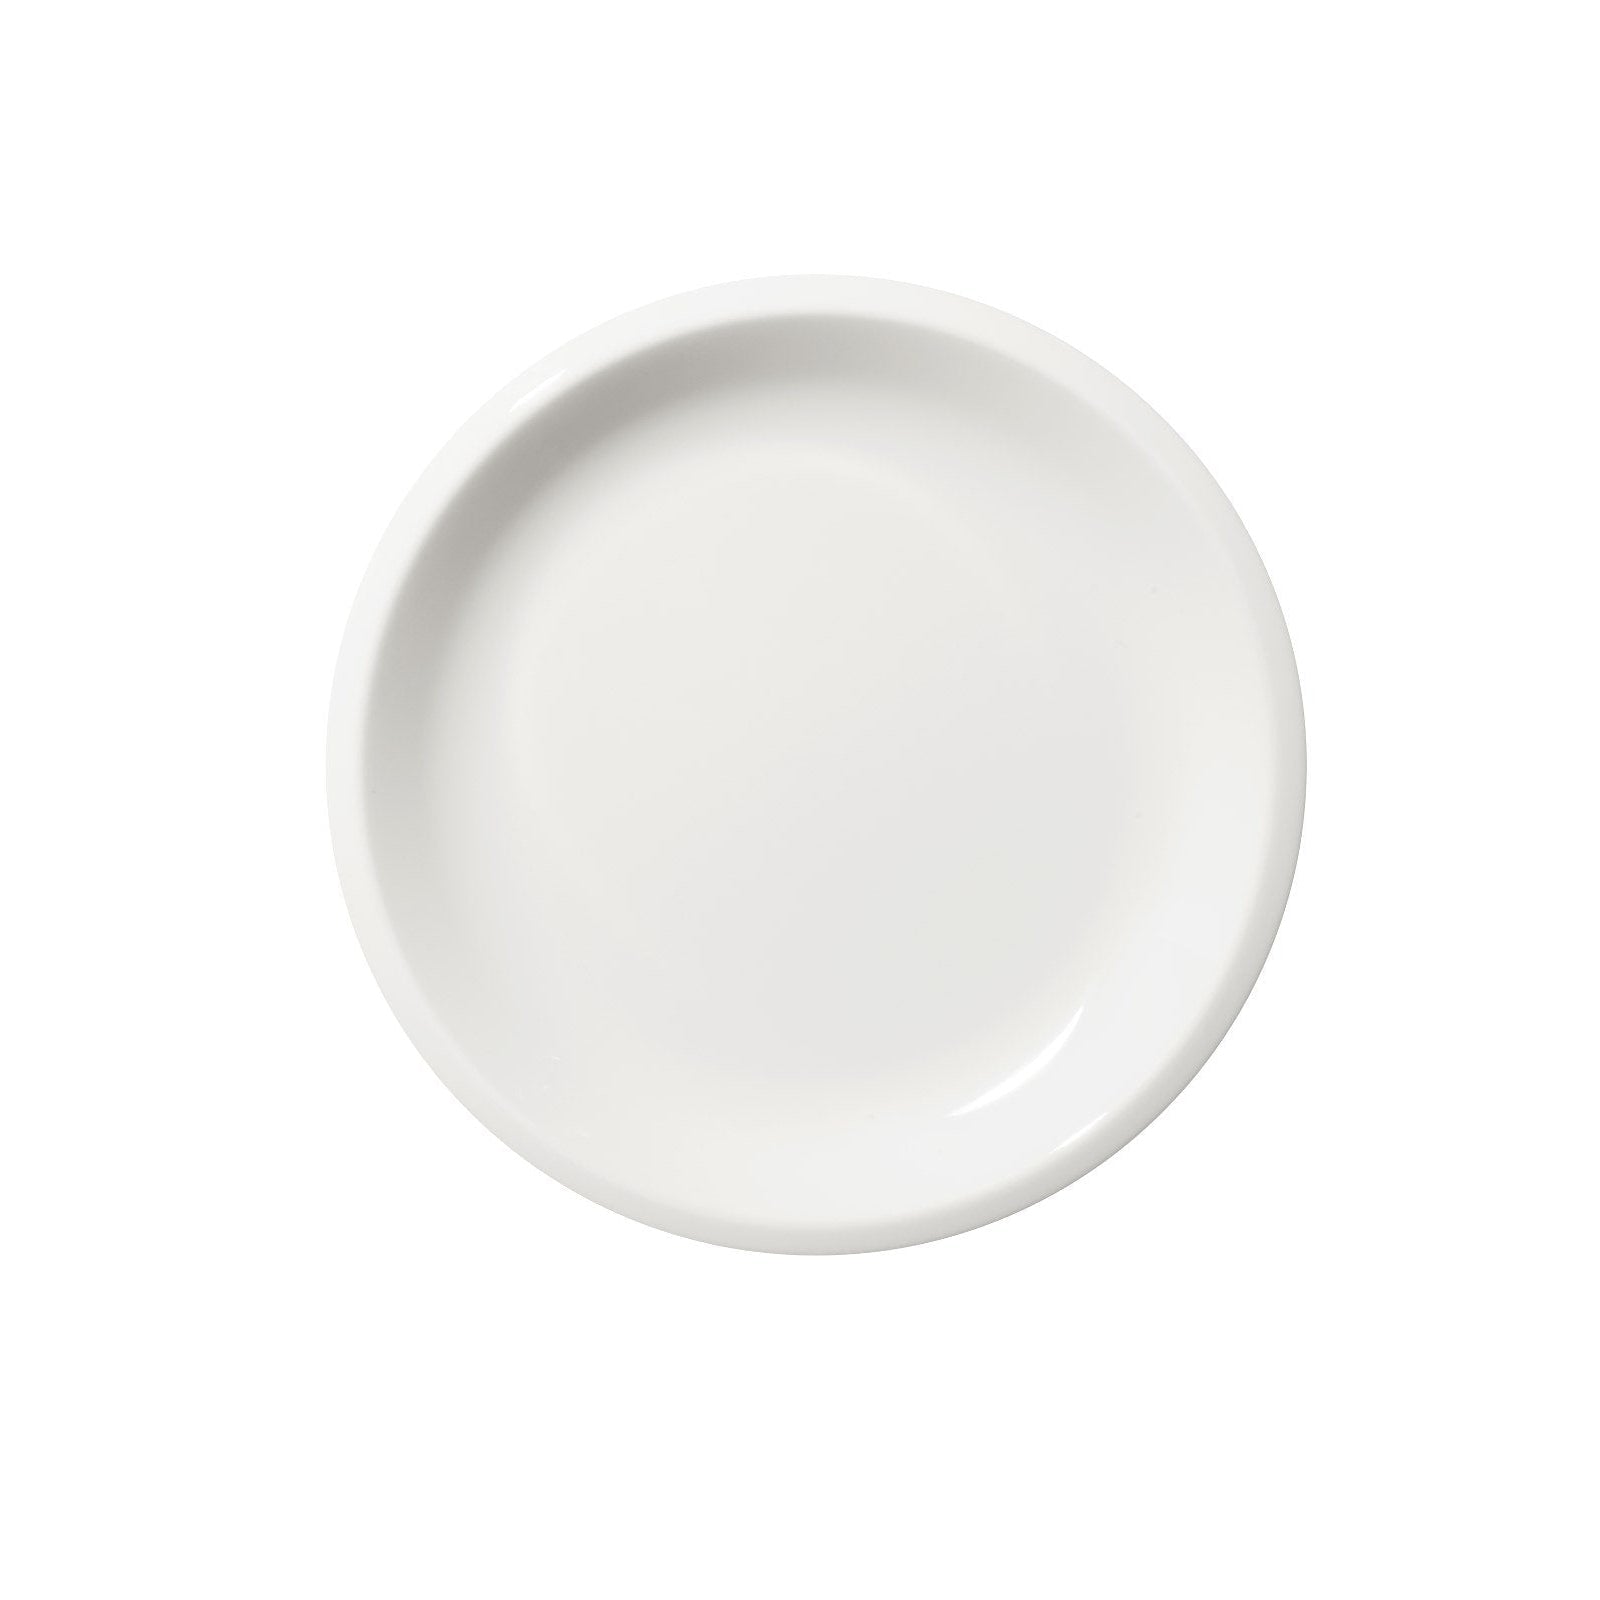 Iittala Raami Plate blanche, 20 cm